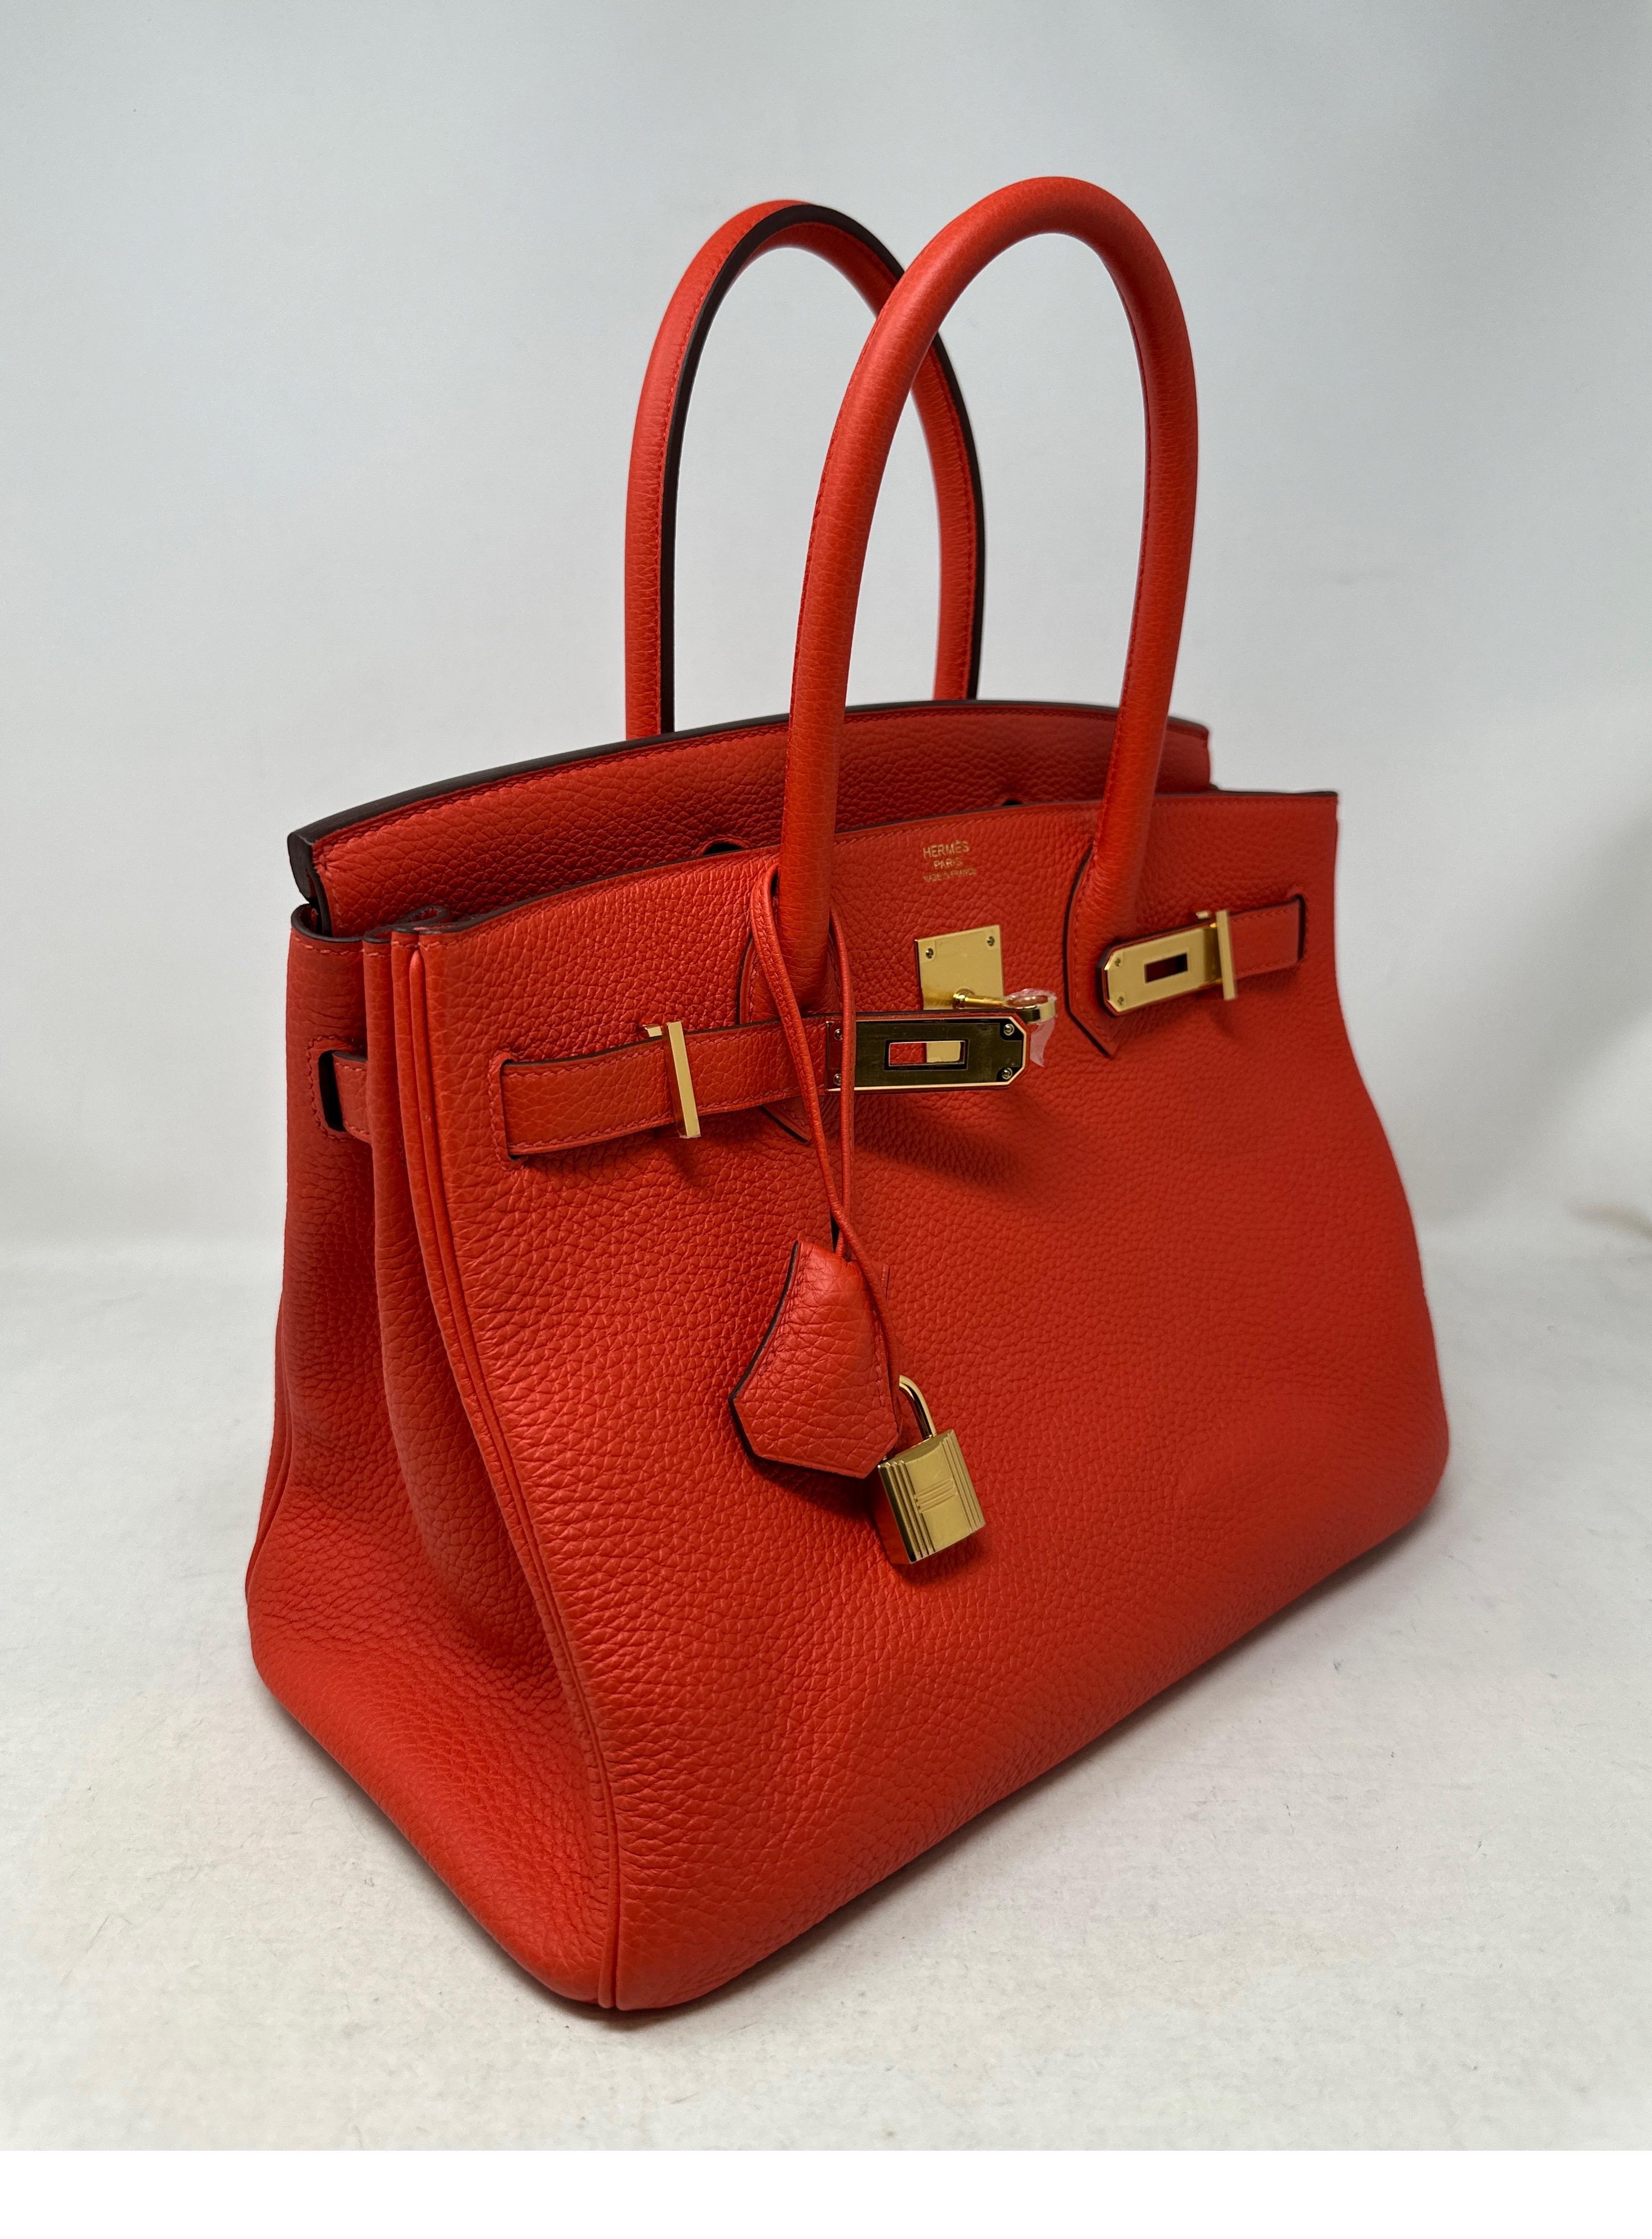 Hermes Capucine Birkin 30 Bag In Excellent Condition For Sale In Athens, GA